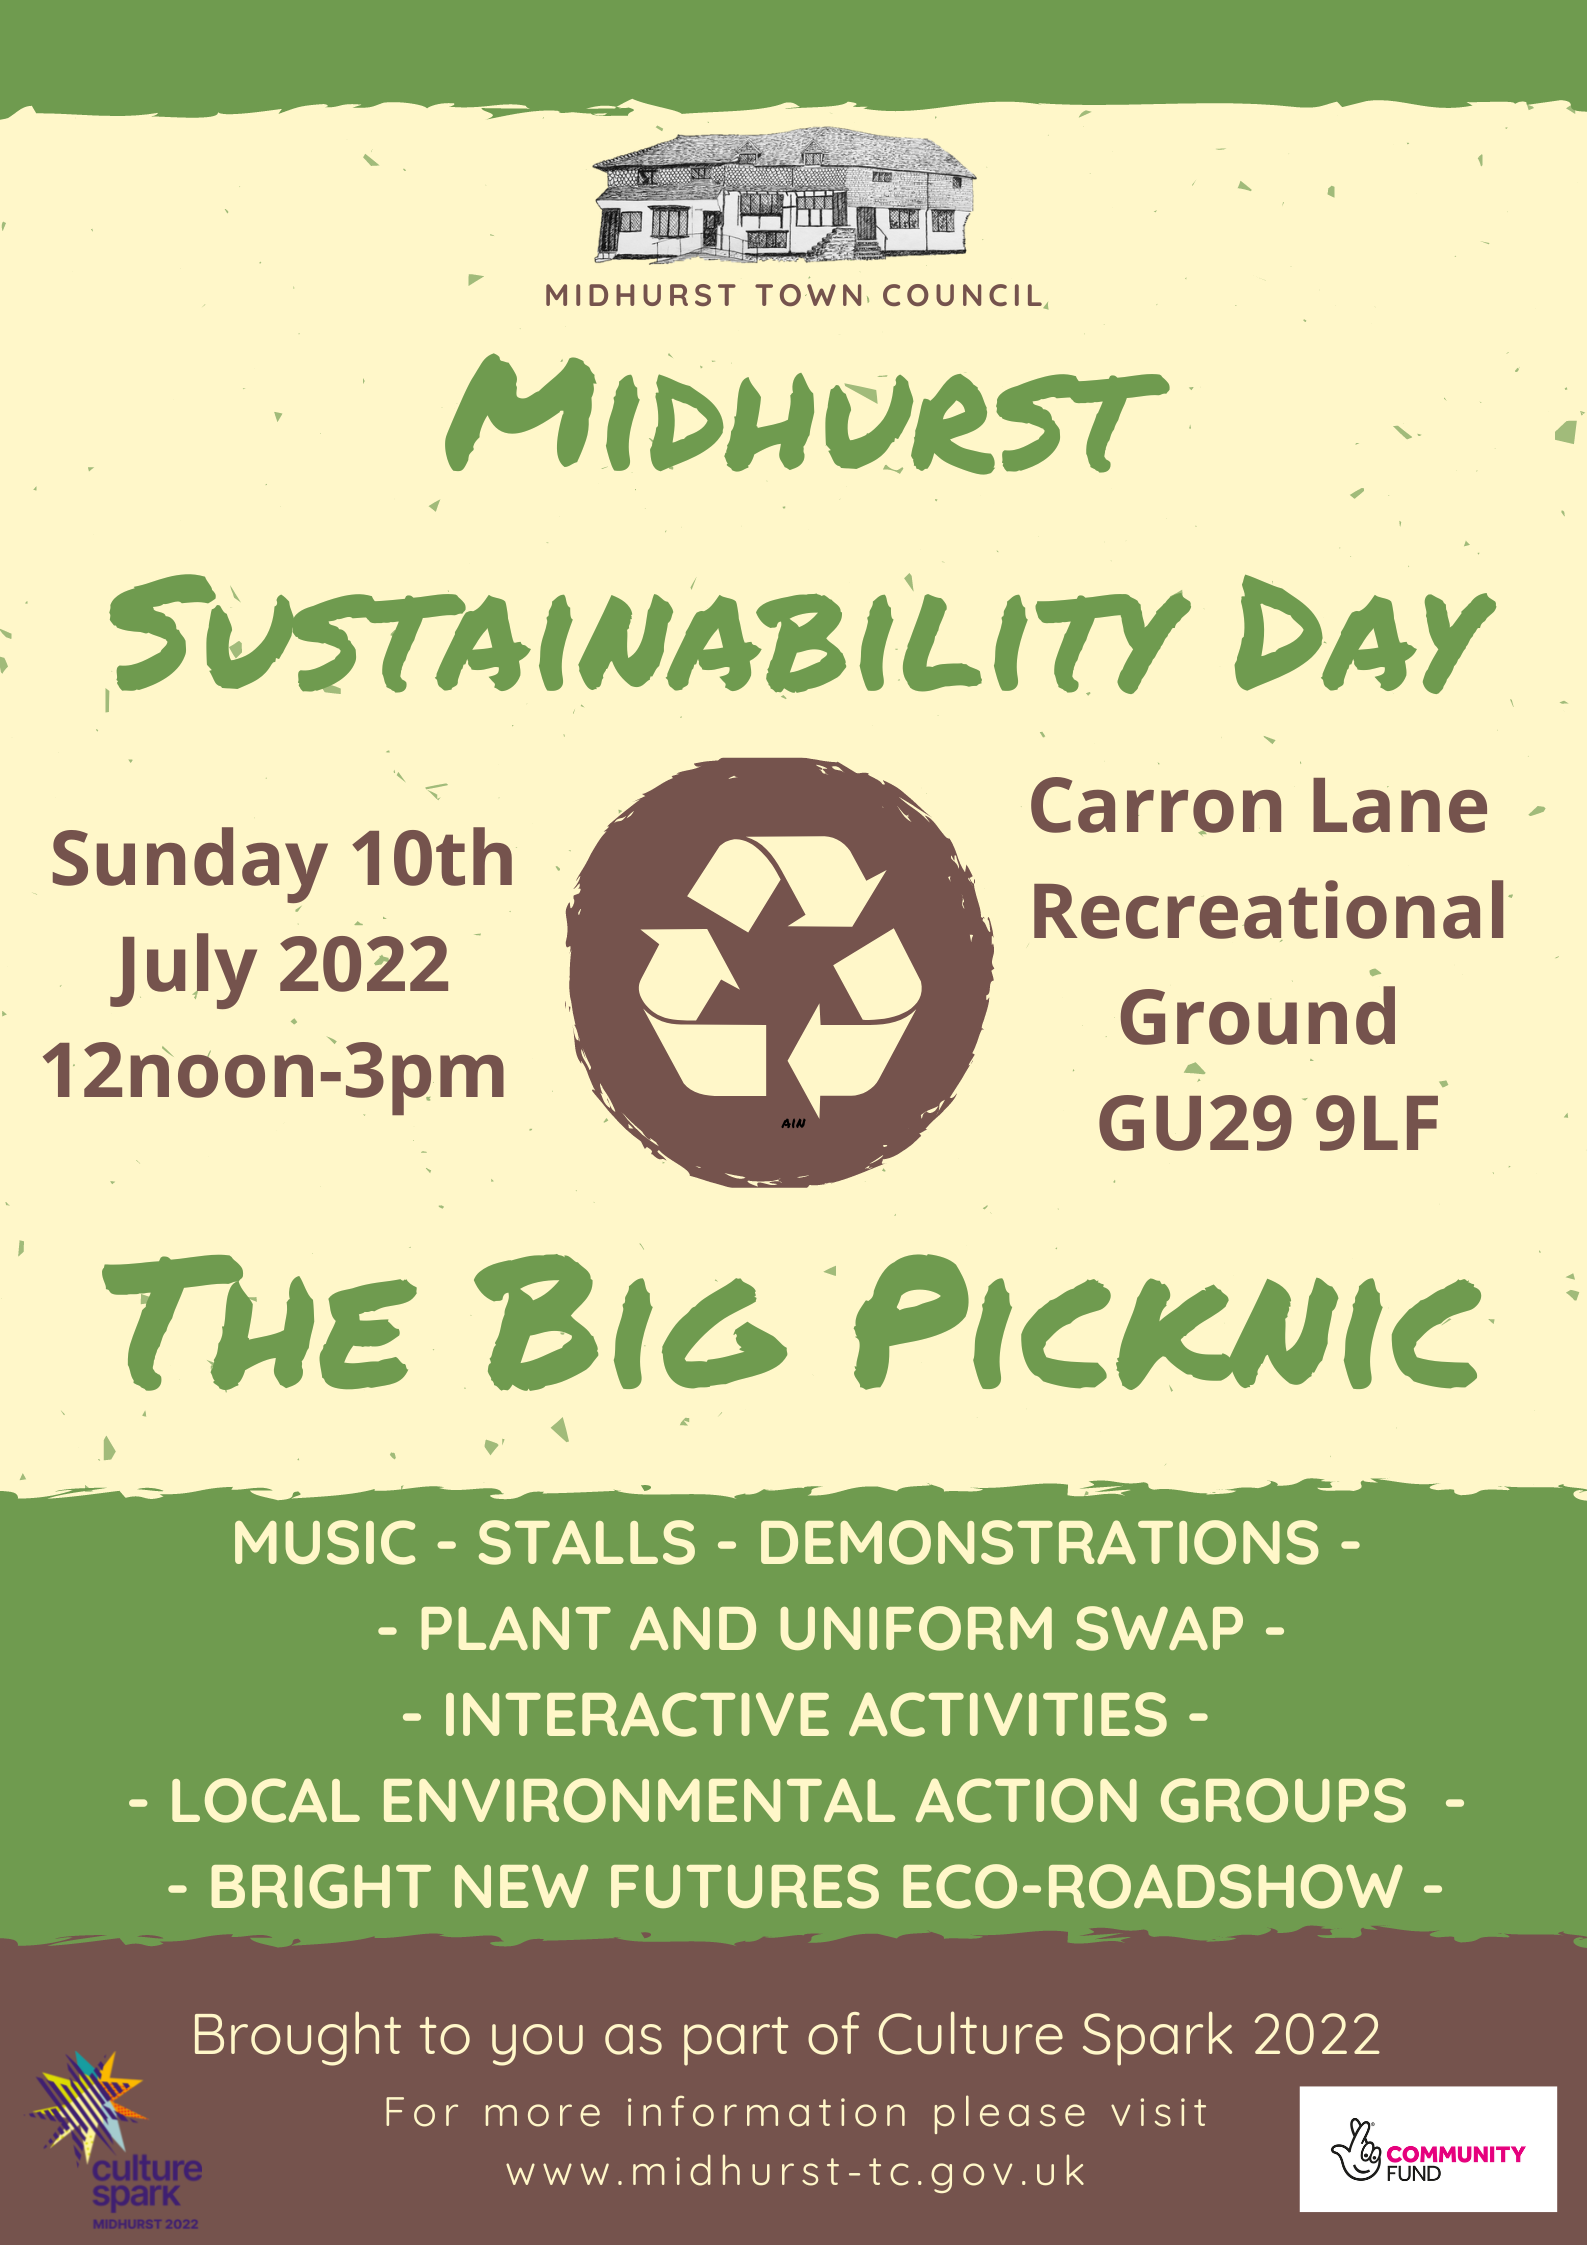 The Big PickNic – Midhurst’s Sustainability Day